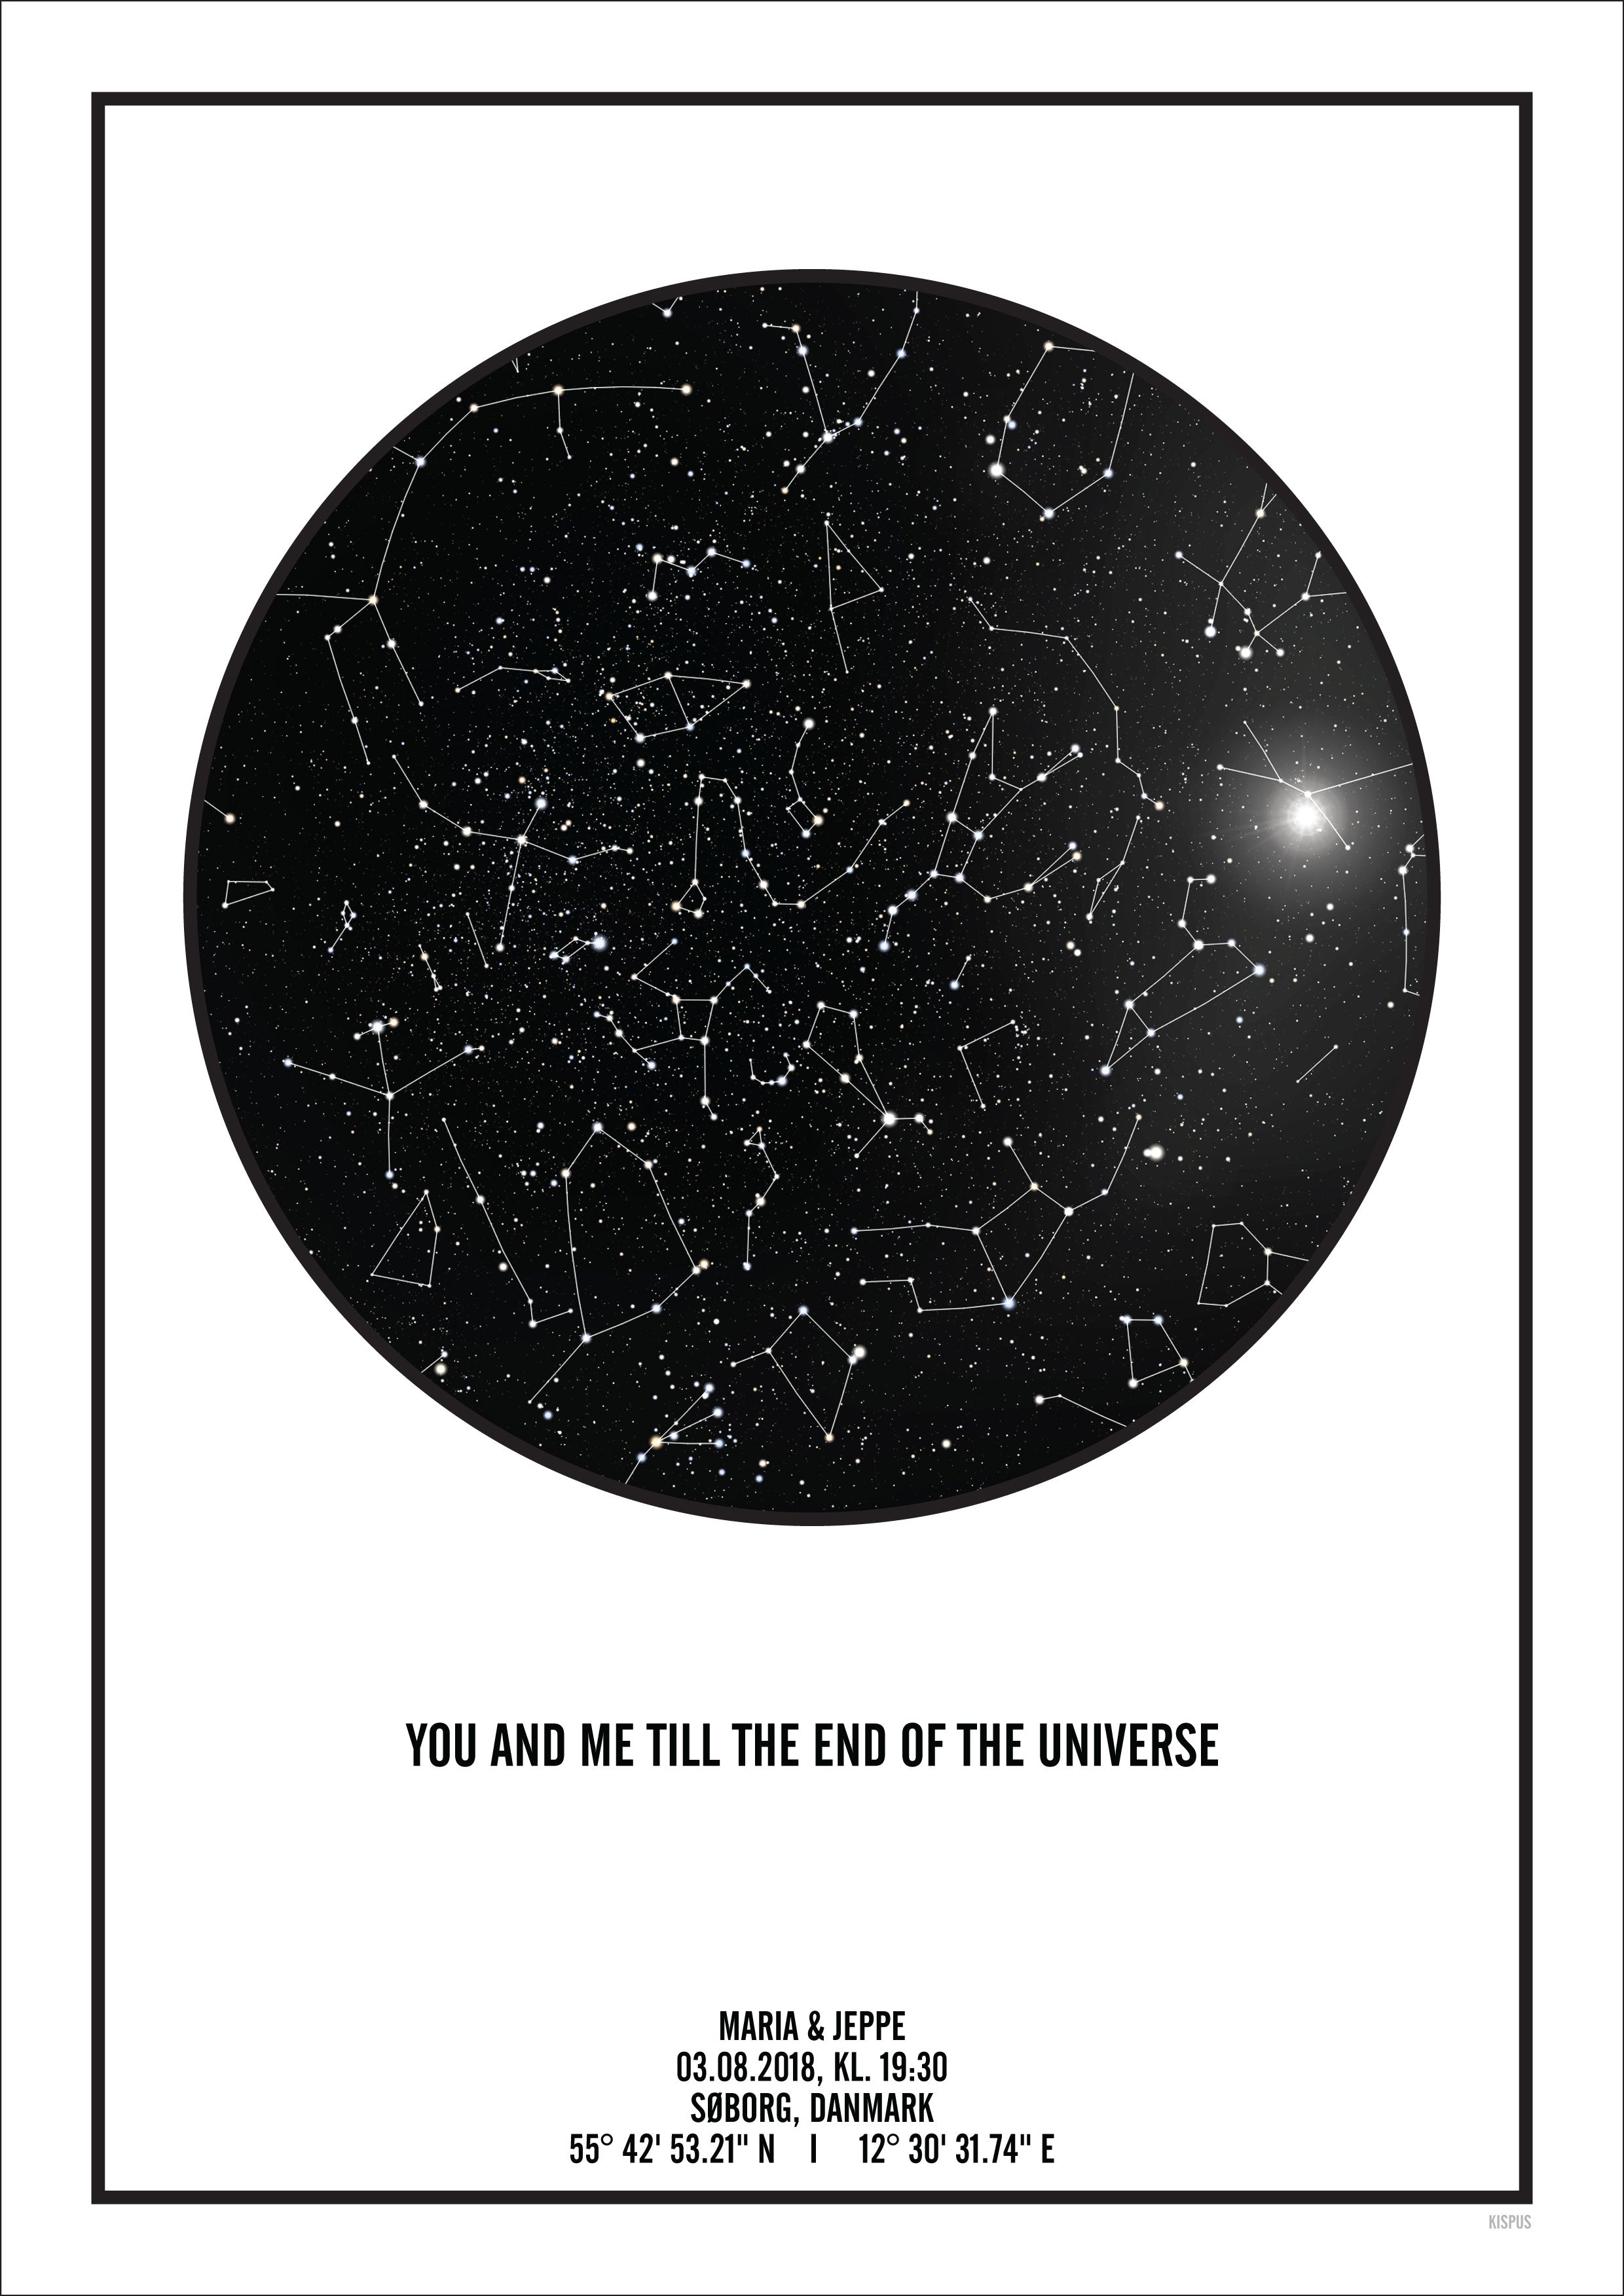 Se PERSONLIG STJERNEHIMMEL PLAKAT (HVID) - 50x70 / Klar stjernehimmel hos KISPUS